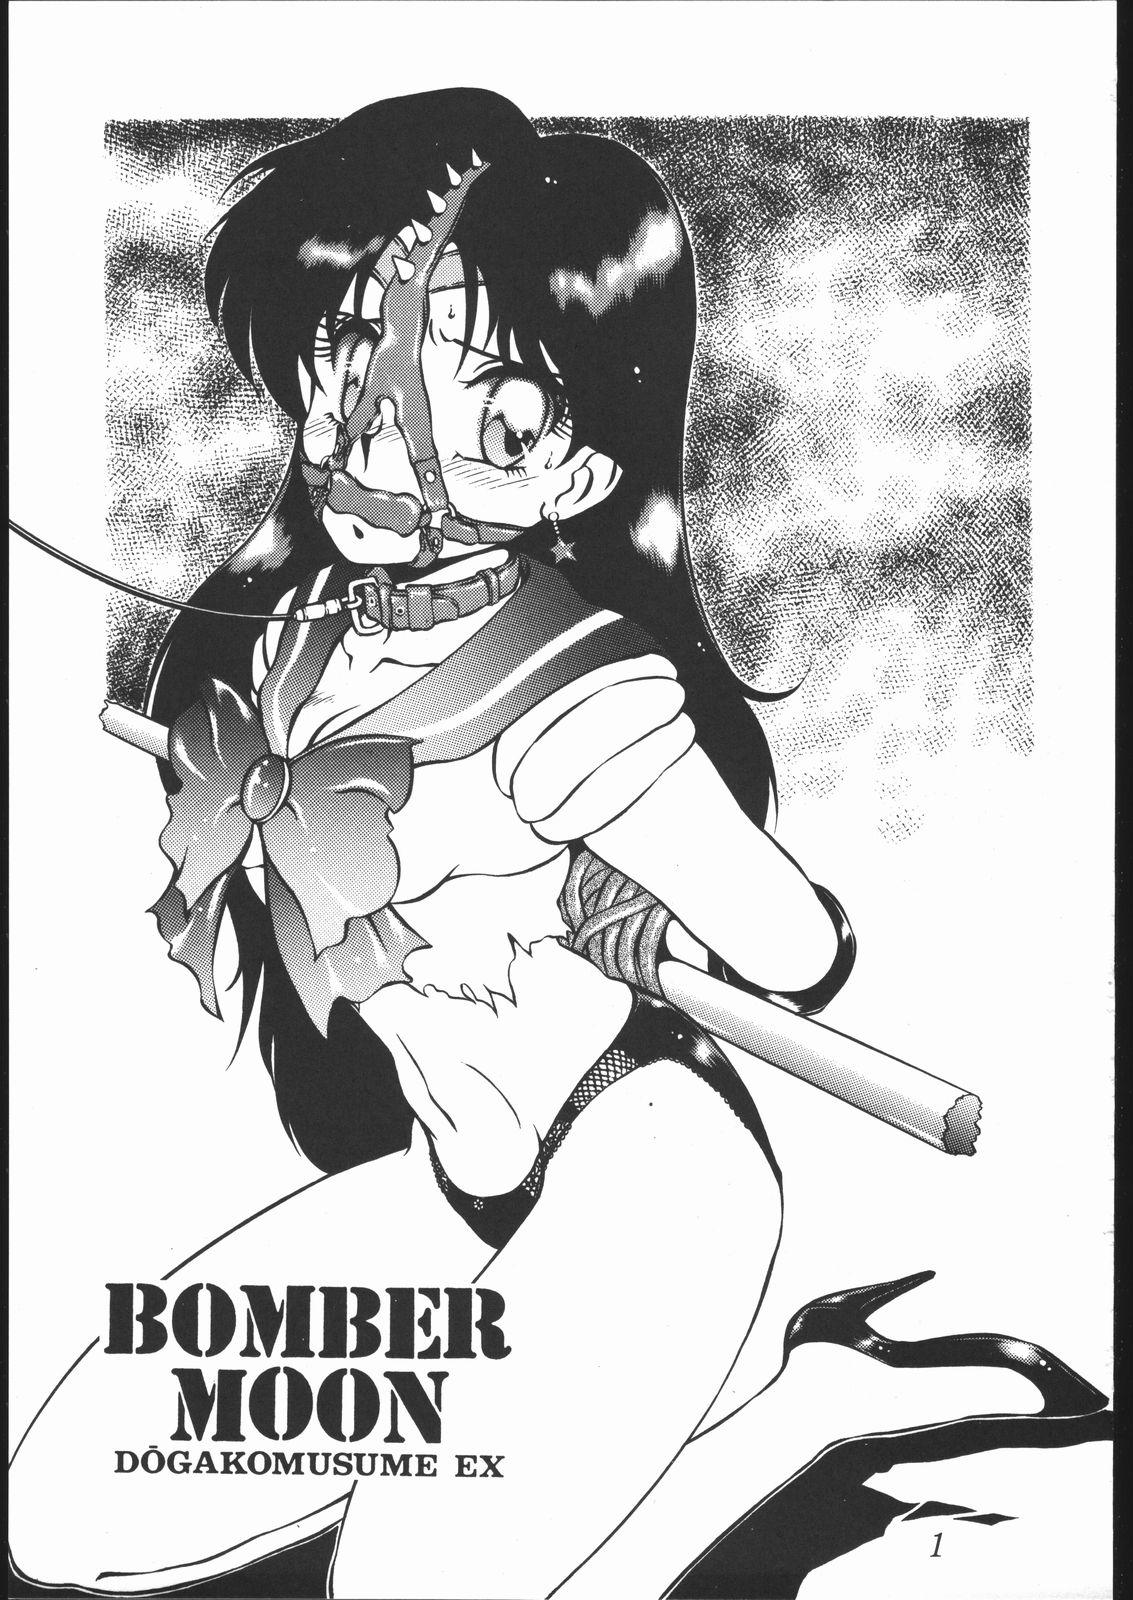 Public Nudity DOGAKOMUSUME EX BOMBER MOON - Sailor moon Putas - Page 2